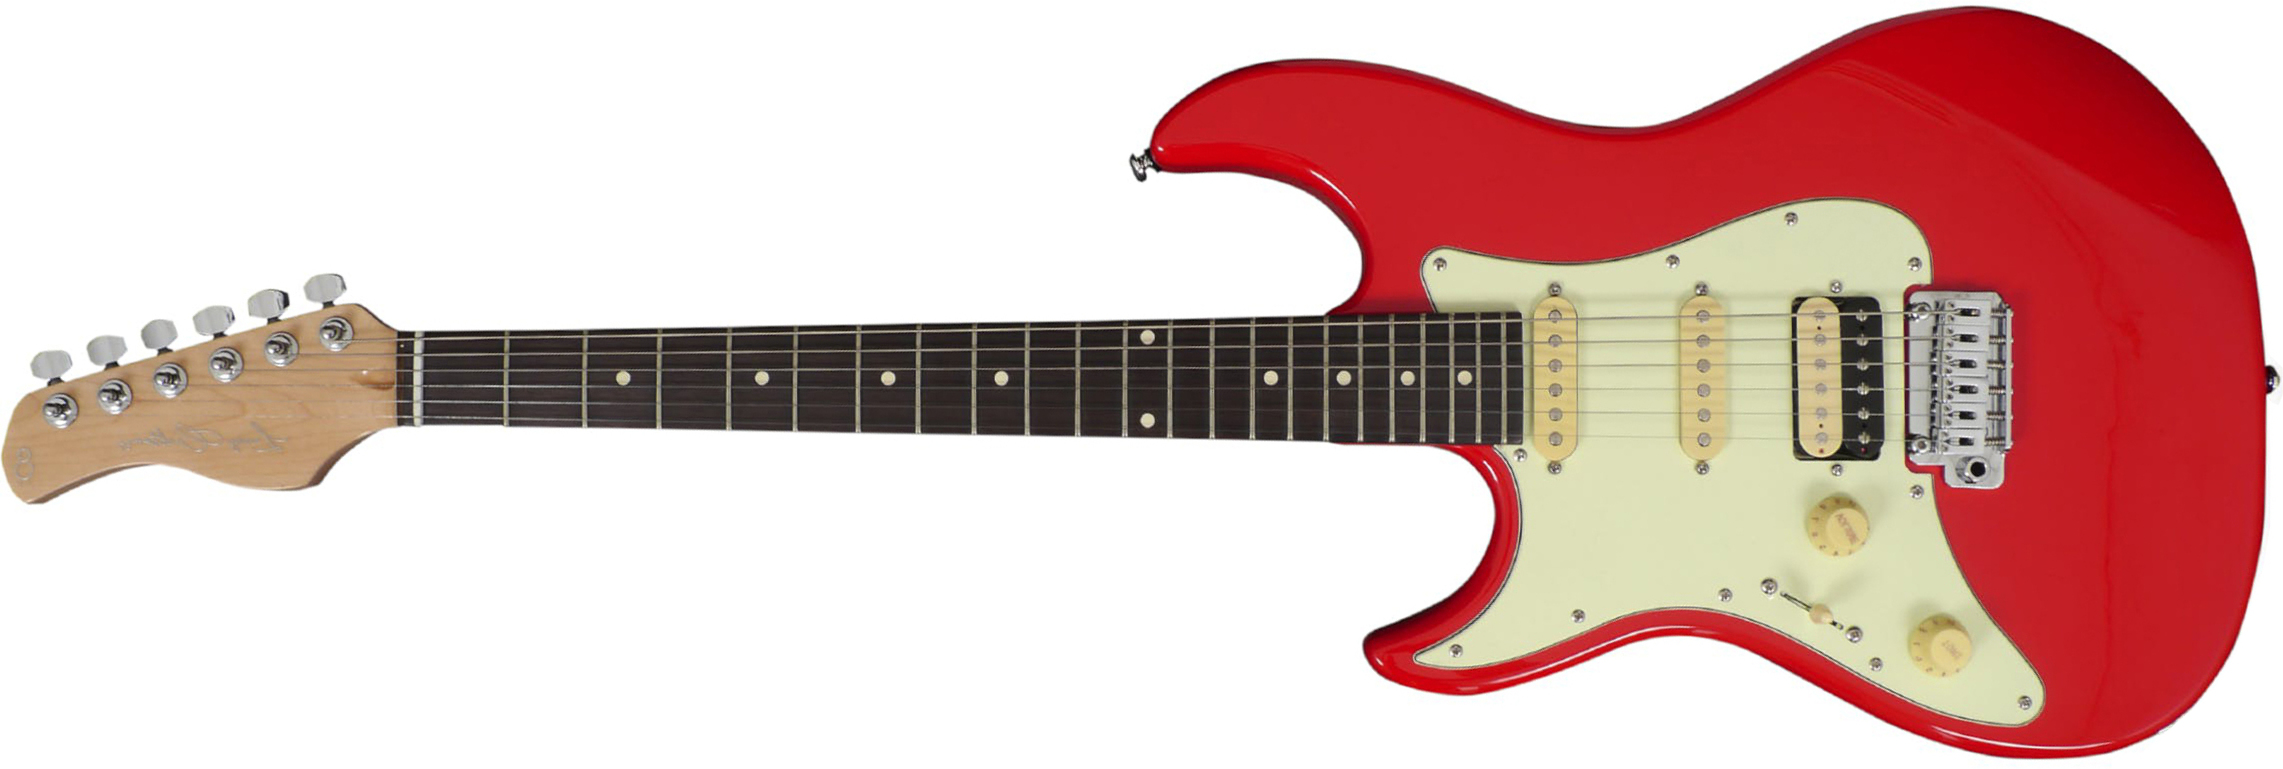 Sire Larry Carlton S3 Lh Signature Gaucher Hss Trem Rw - Dakota Red - Left-handed electric guitar - Main picture